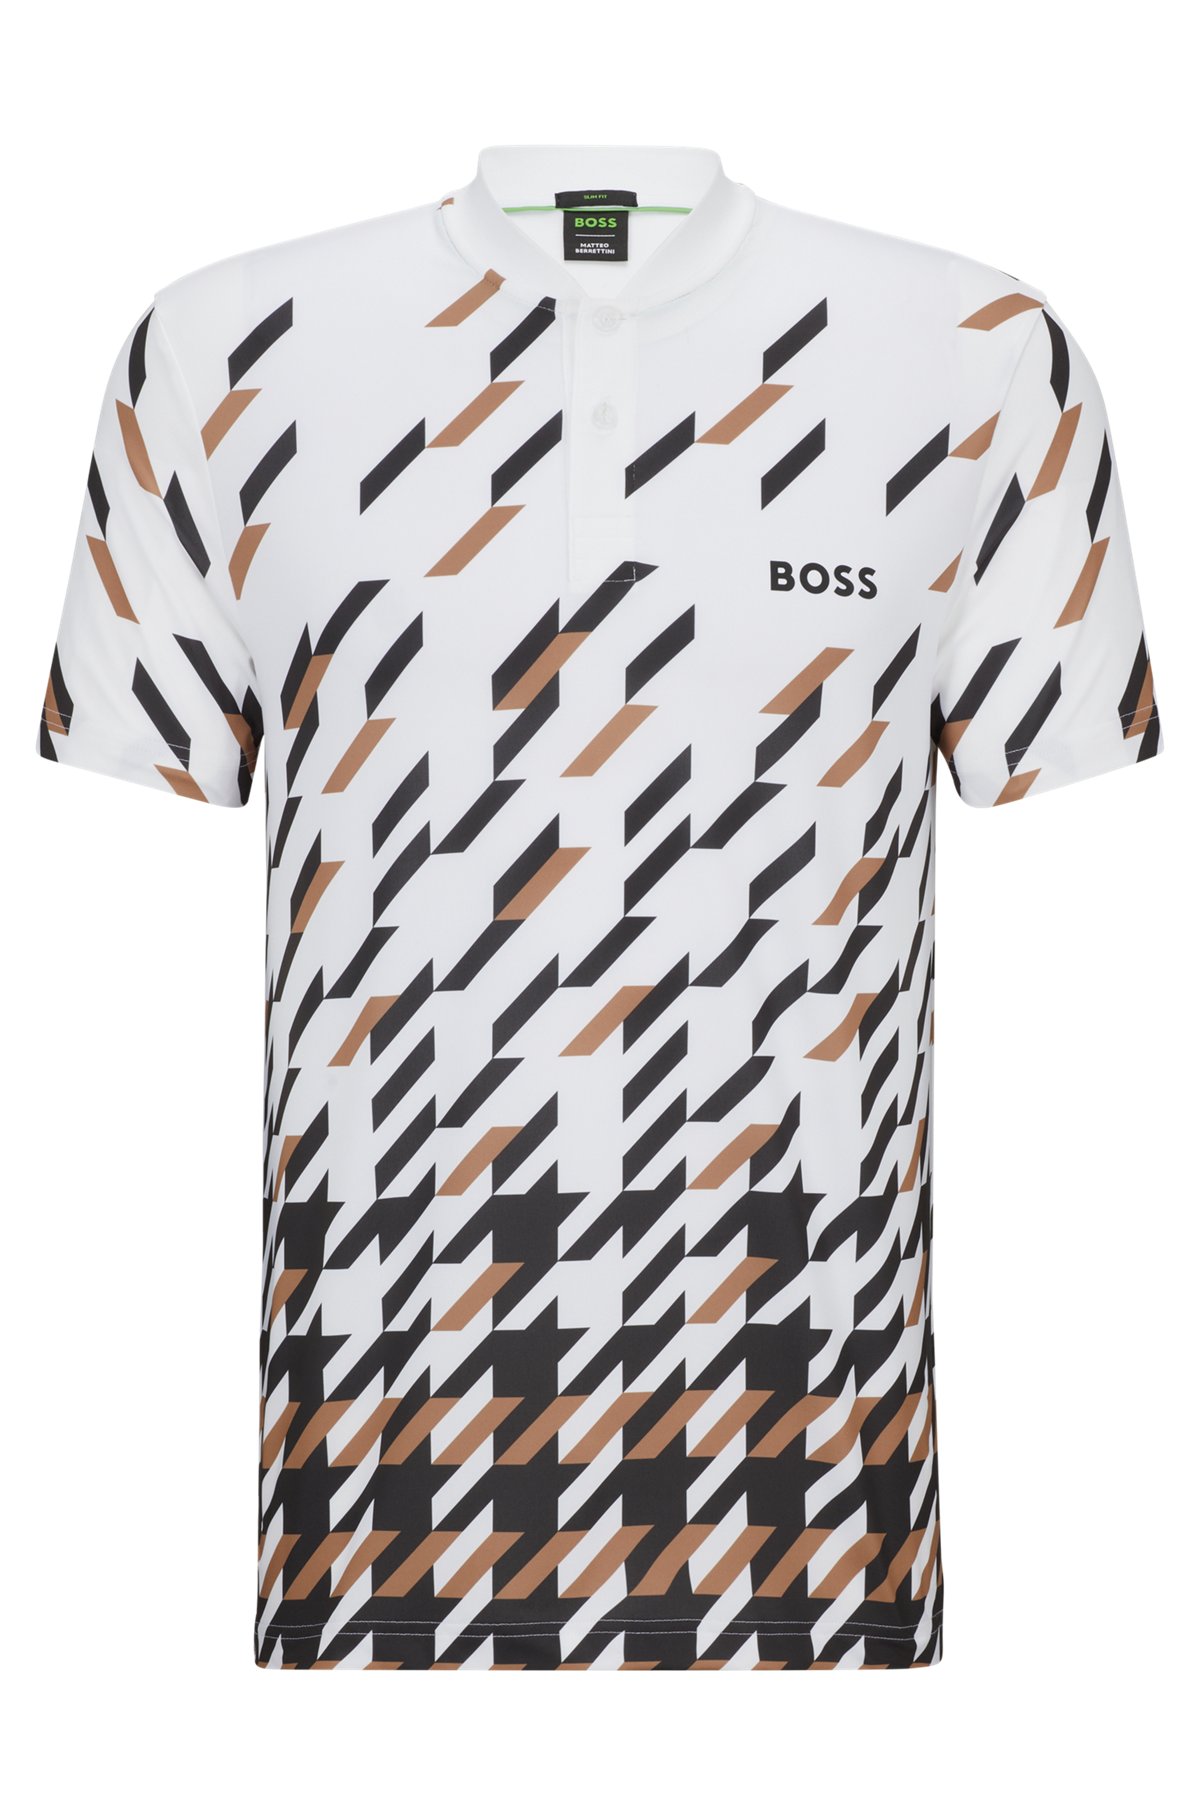 BOSS x Matteo Berrettini slim-fit houndstooth polo shirt, Patterned